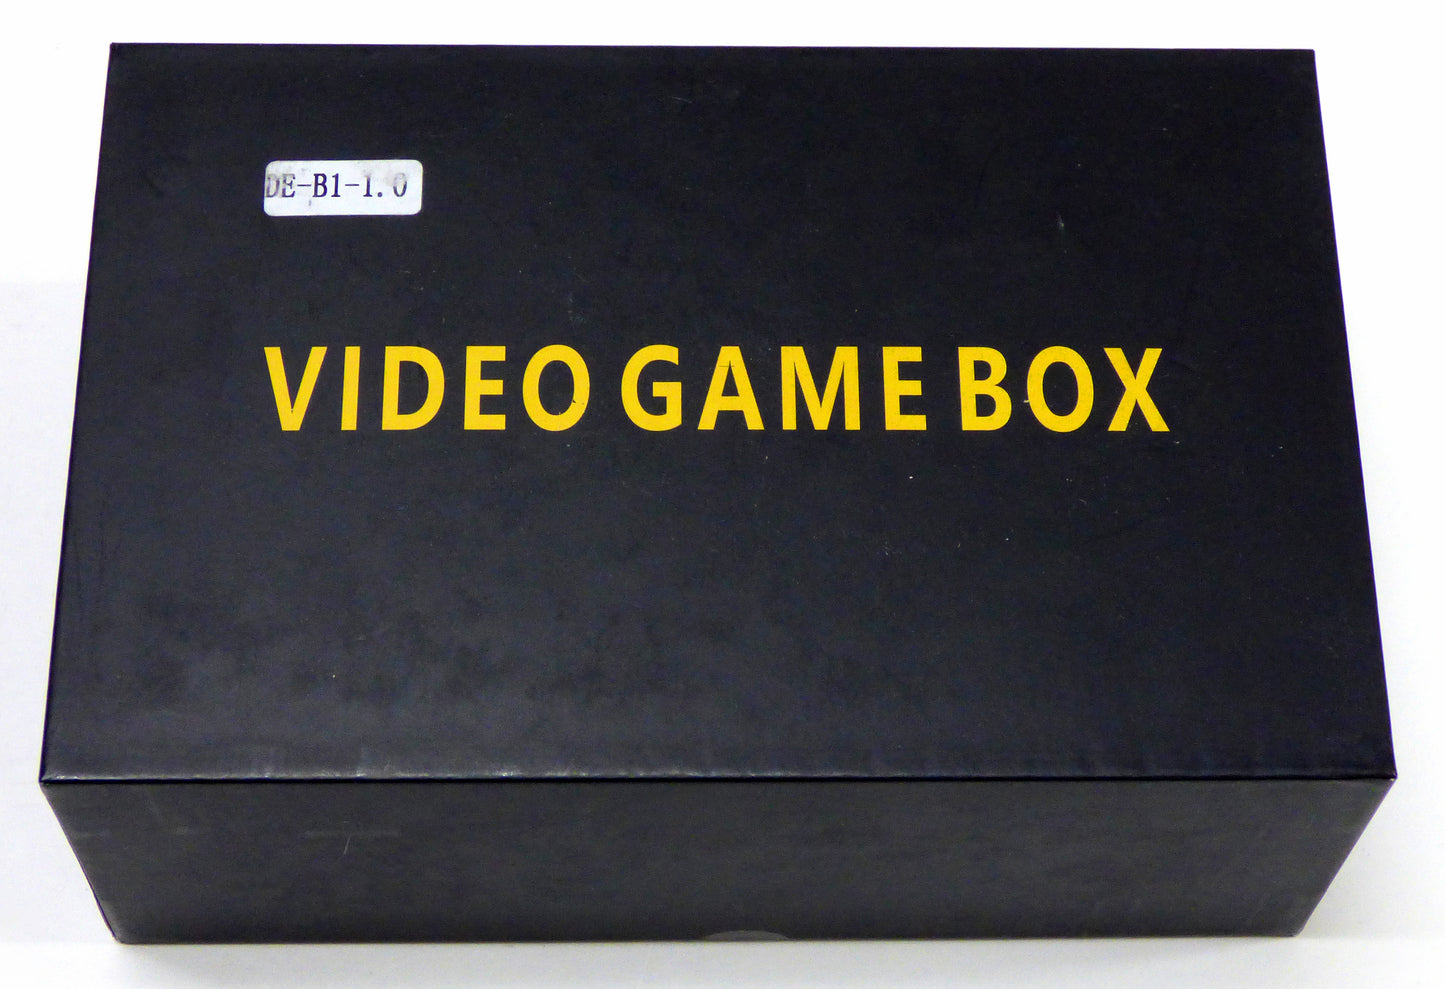 link-game video game box de-b1-1.0 retail box